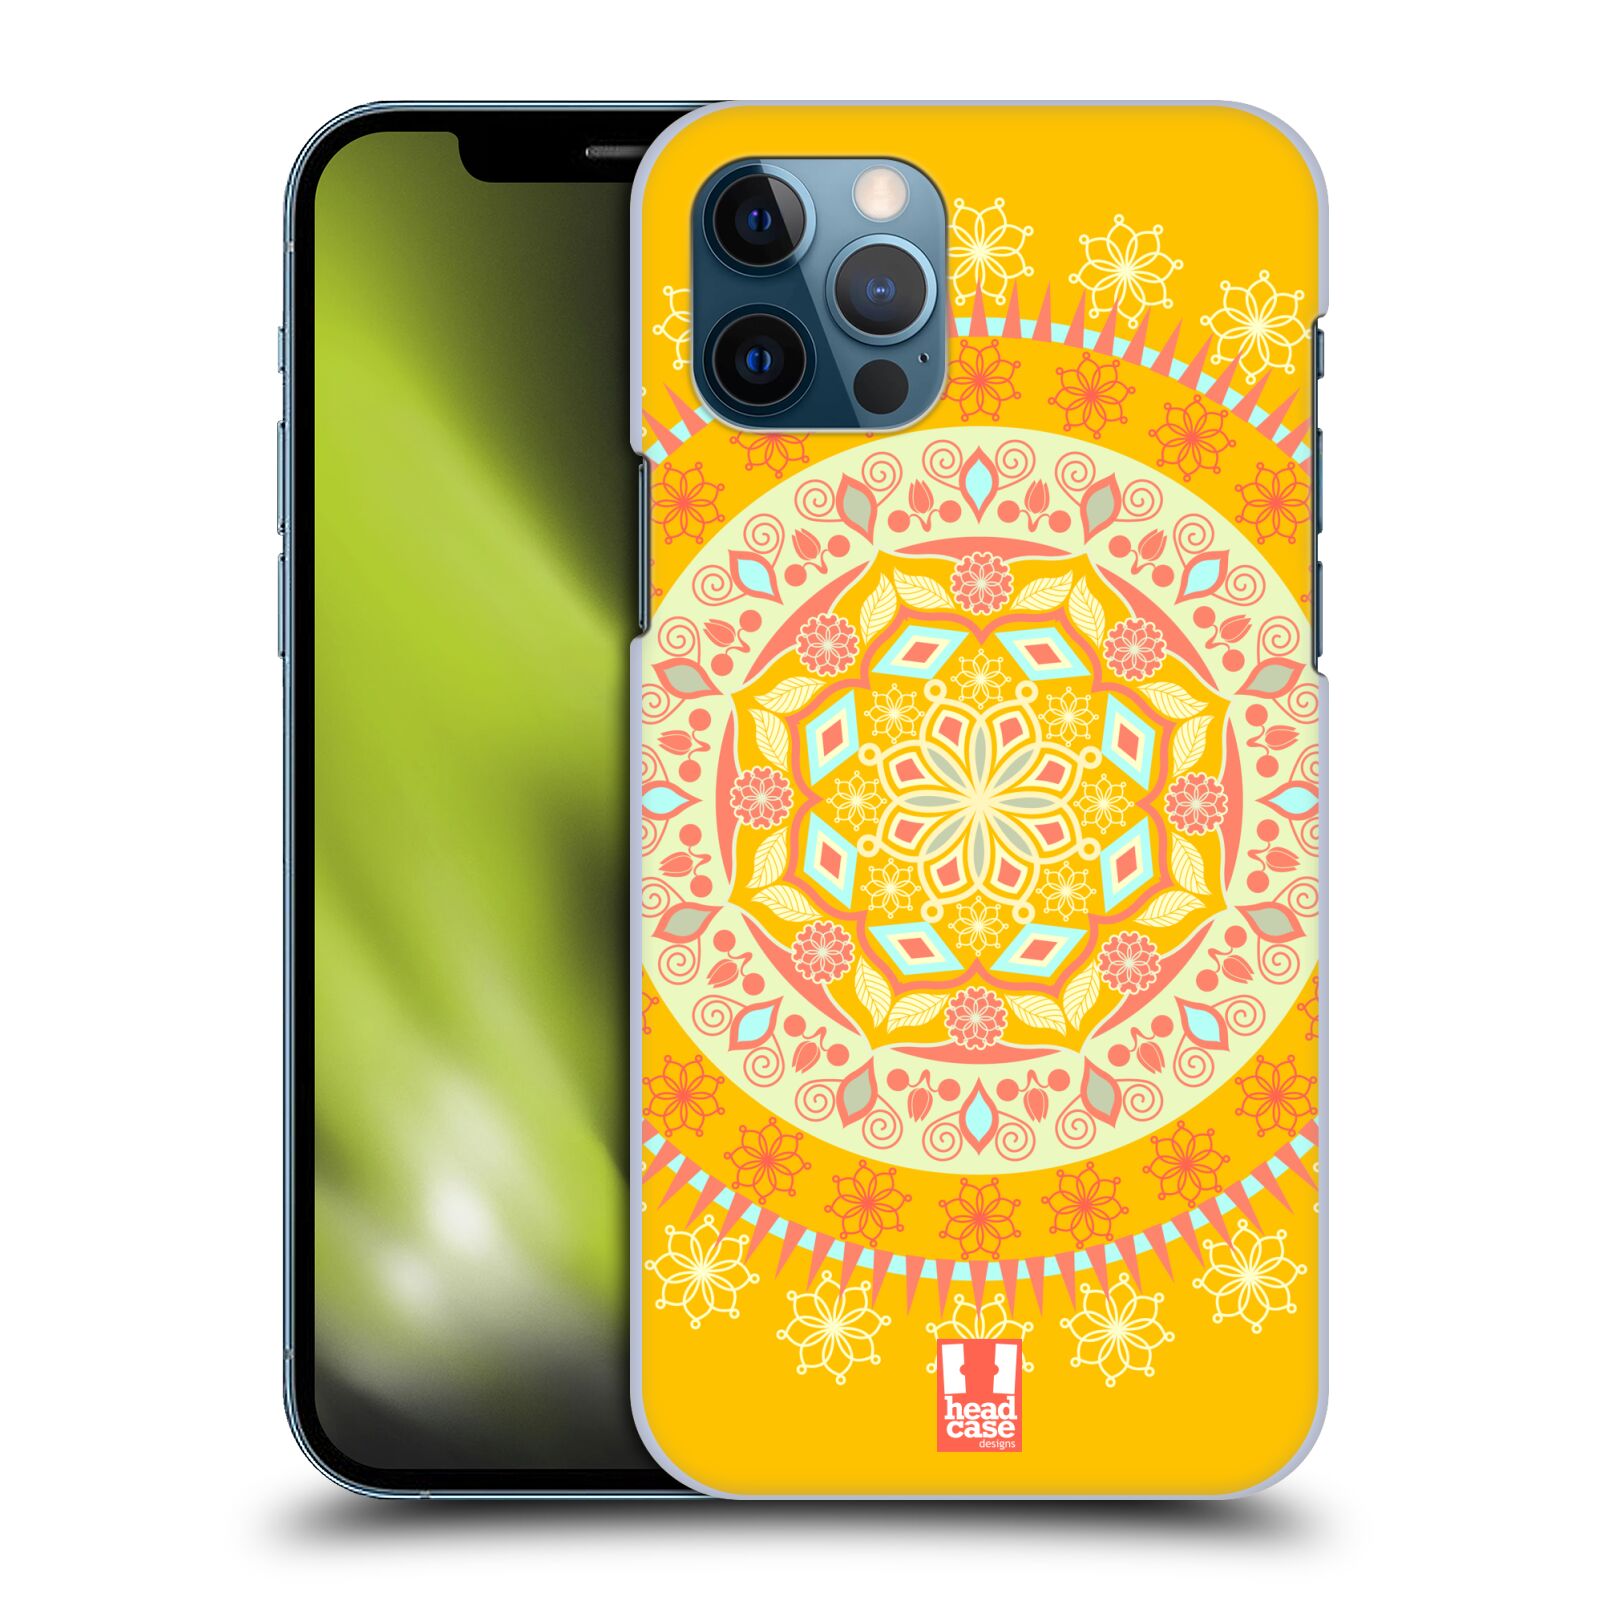 HEAD CASE plastový obal na mobil Apple Iphone 12 / Iphone 12 PRO vzor Indie Mandala slunce barevný motiv ŽLUTÁ